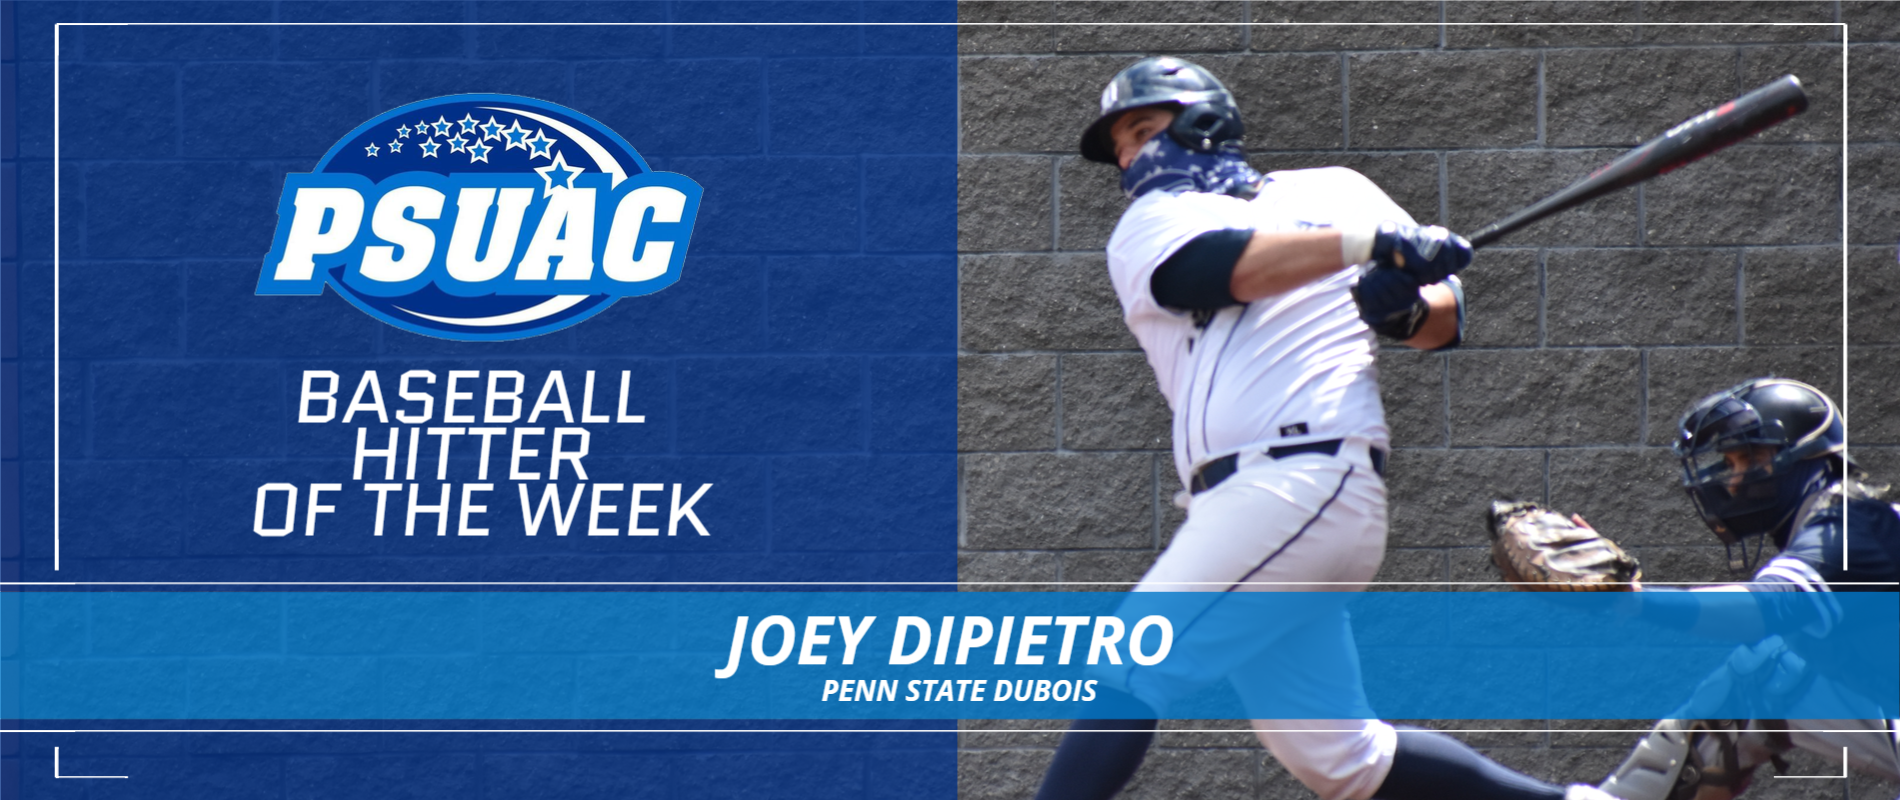 Penn State DuBois' Joey DiPietro.